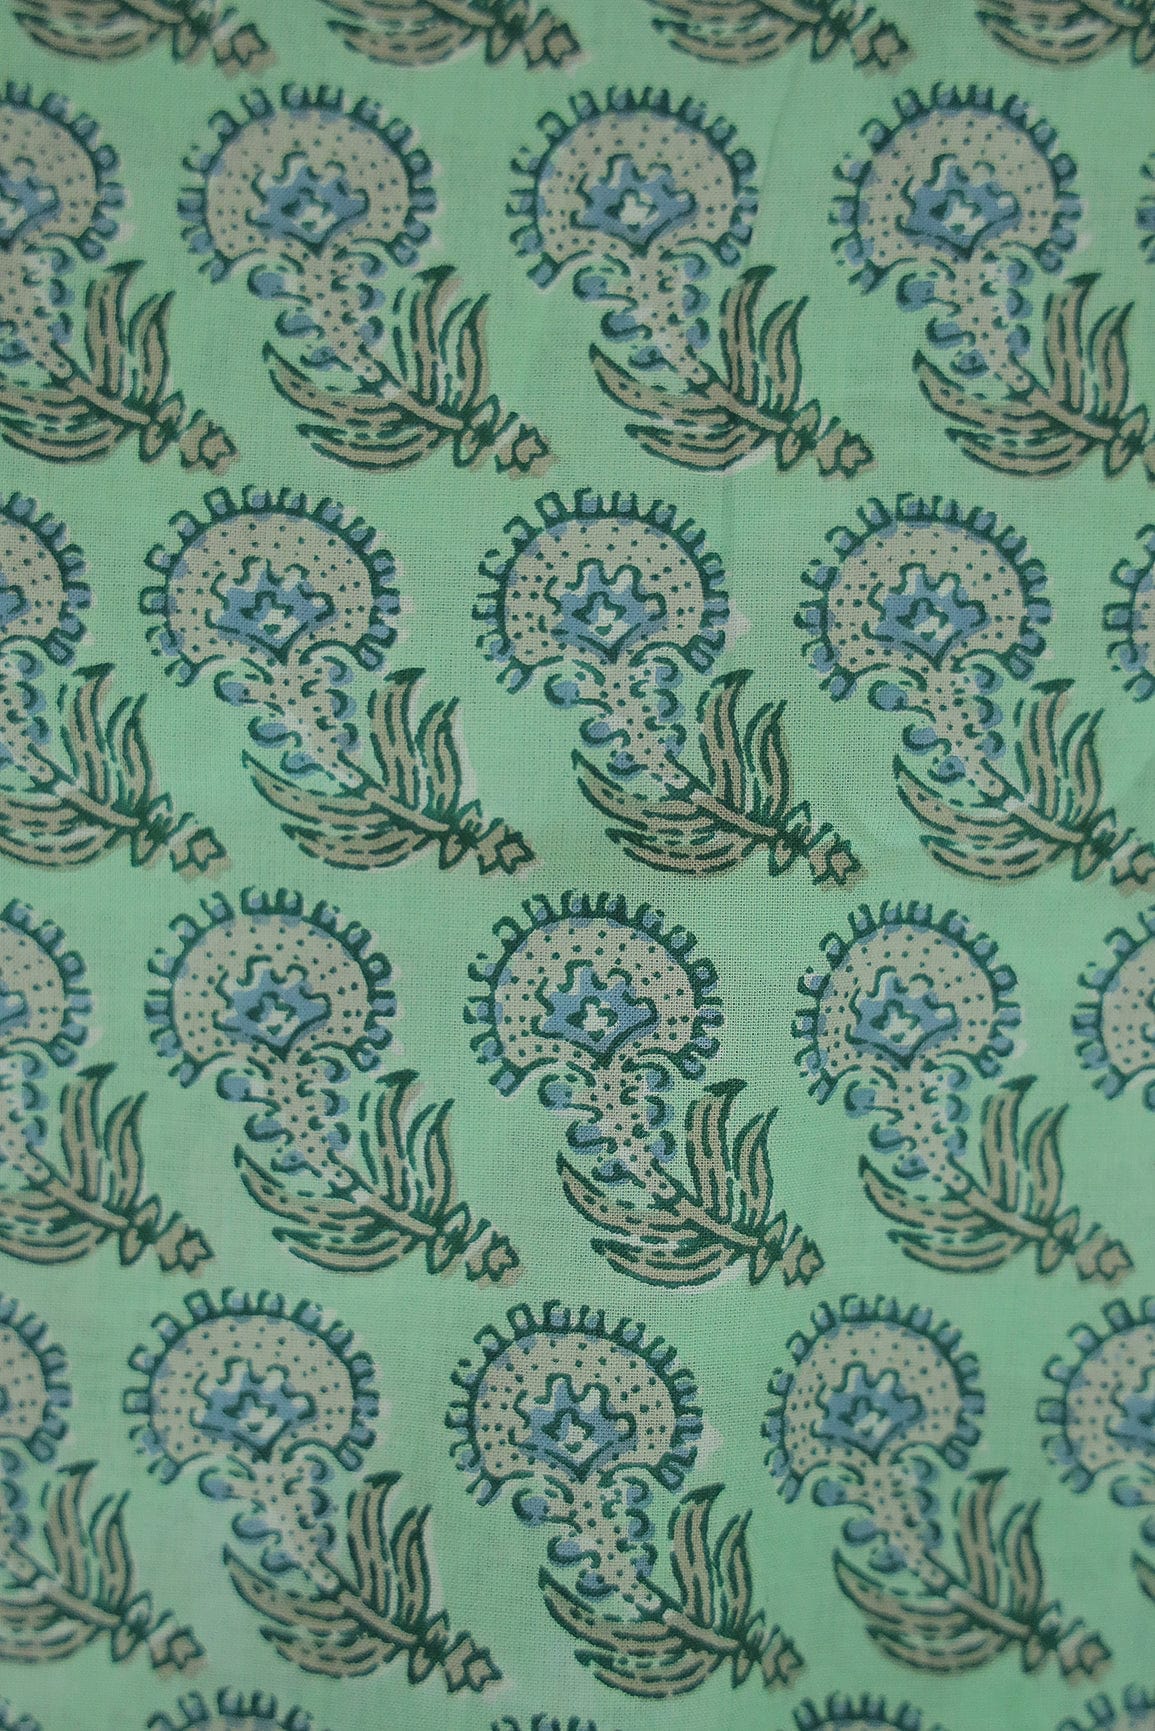 doeraa Prints Green Elegant Floral Screen Print On organic Cotton Fabric